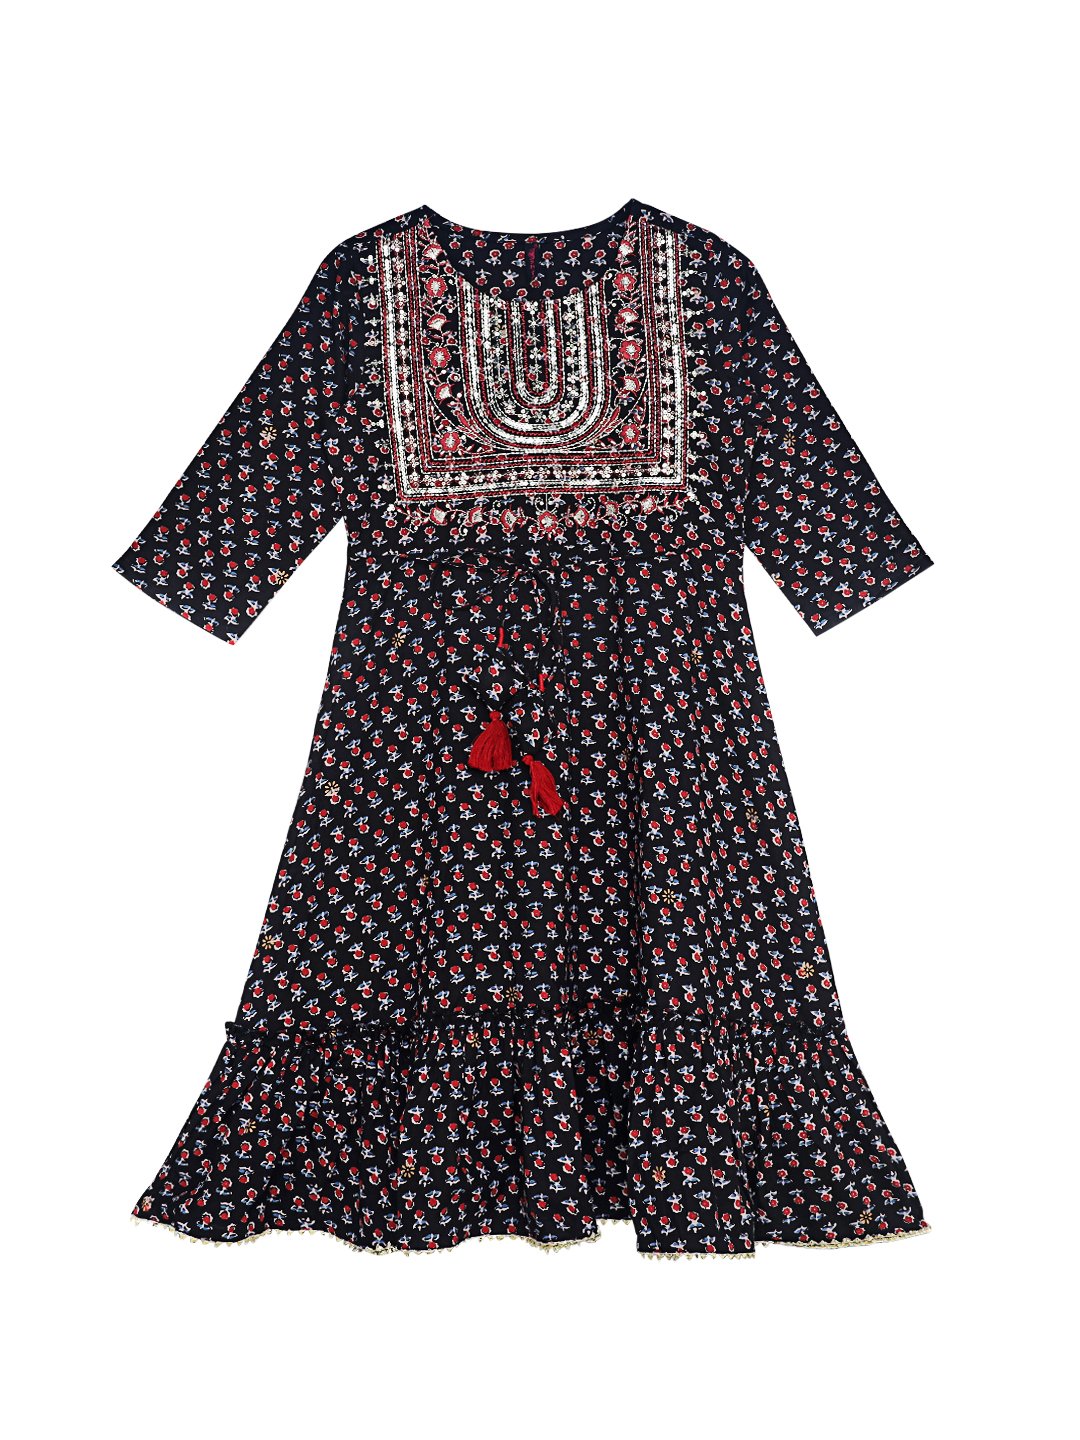 Ishin Girls Black Embroidered Tiered Dress